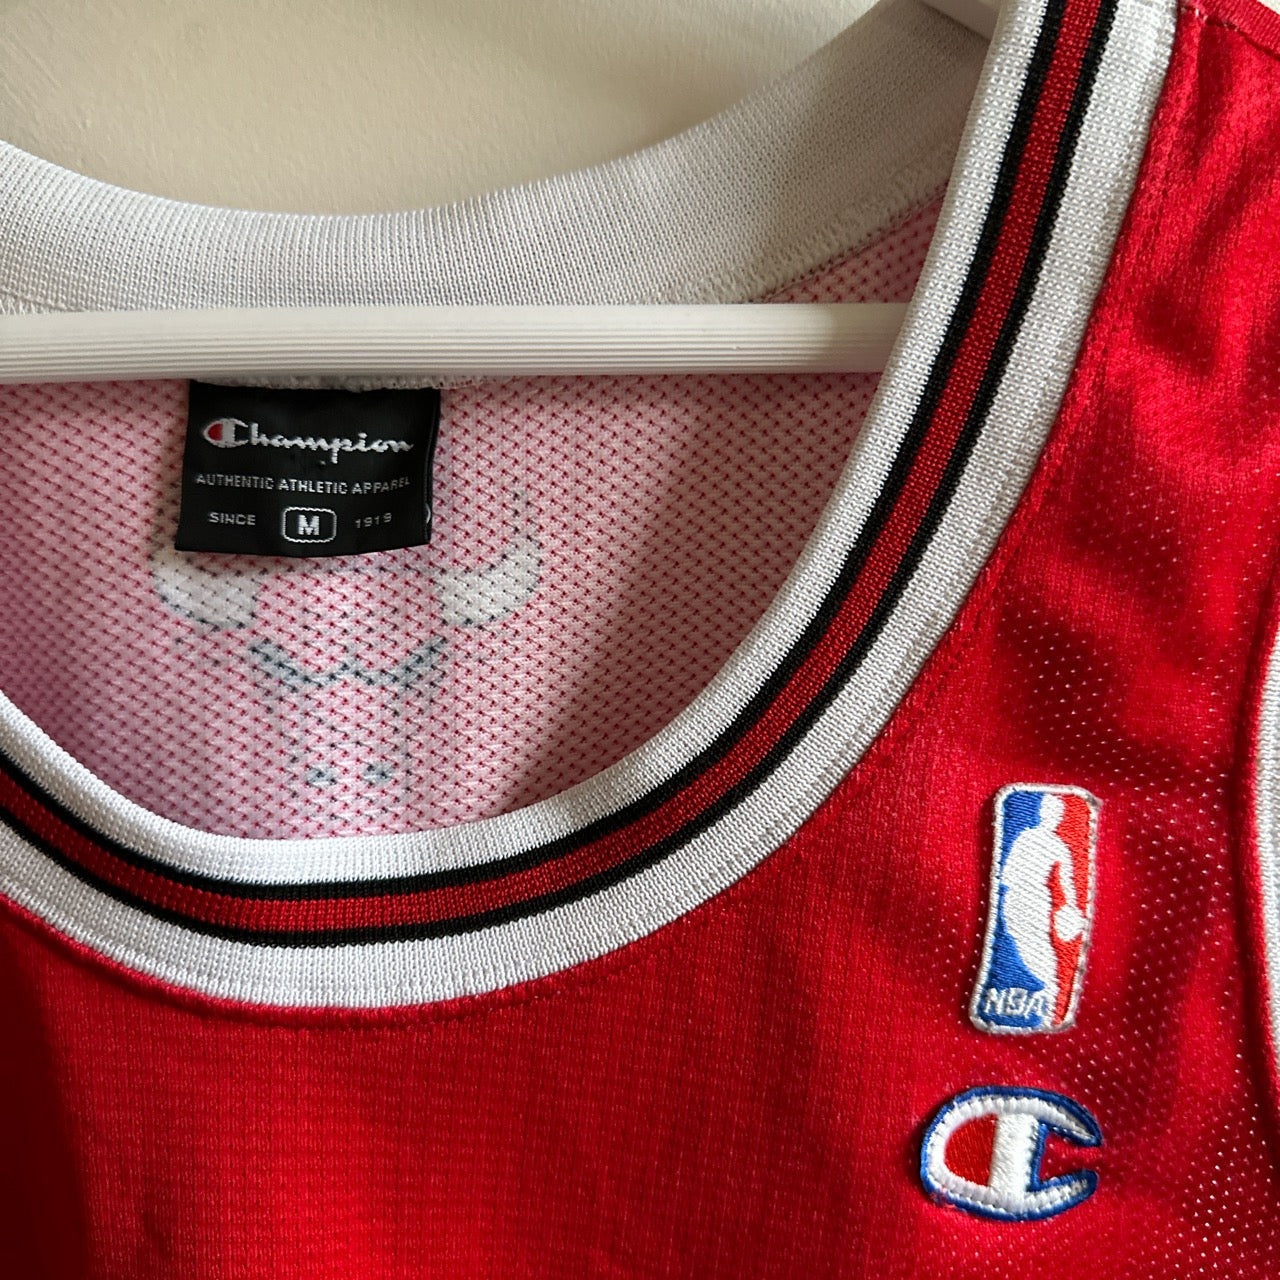 Chicago Bulls Luol Deng Champion jersey - Medium